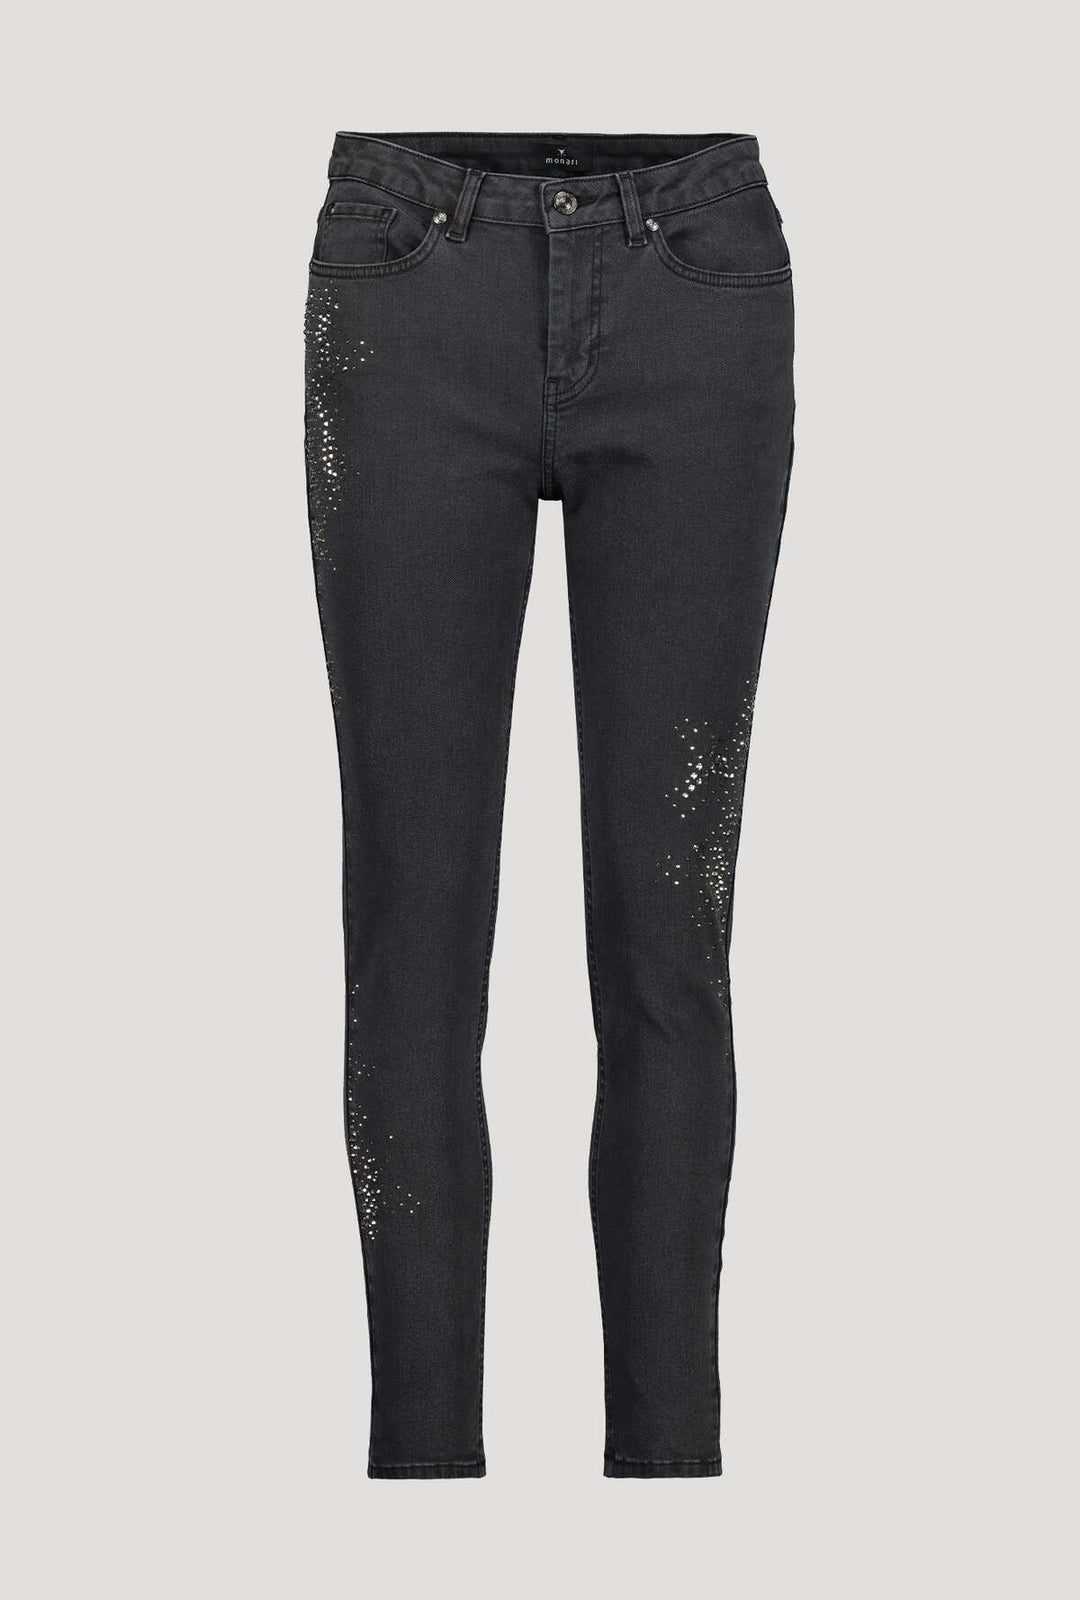 Monari 405892 Dark Grey Skinny Jeans with Rhinestones Front | Dotique